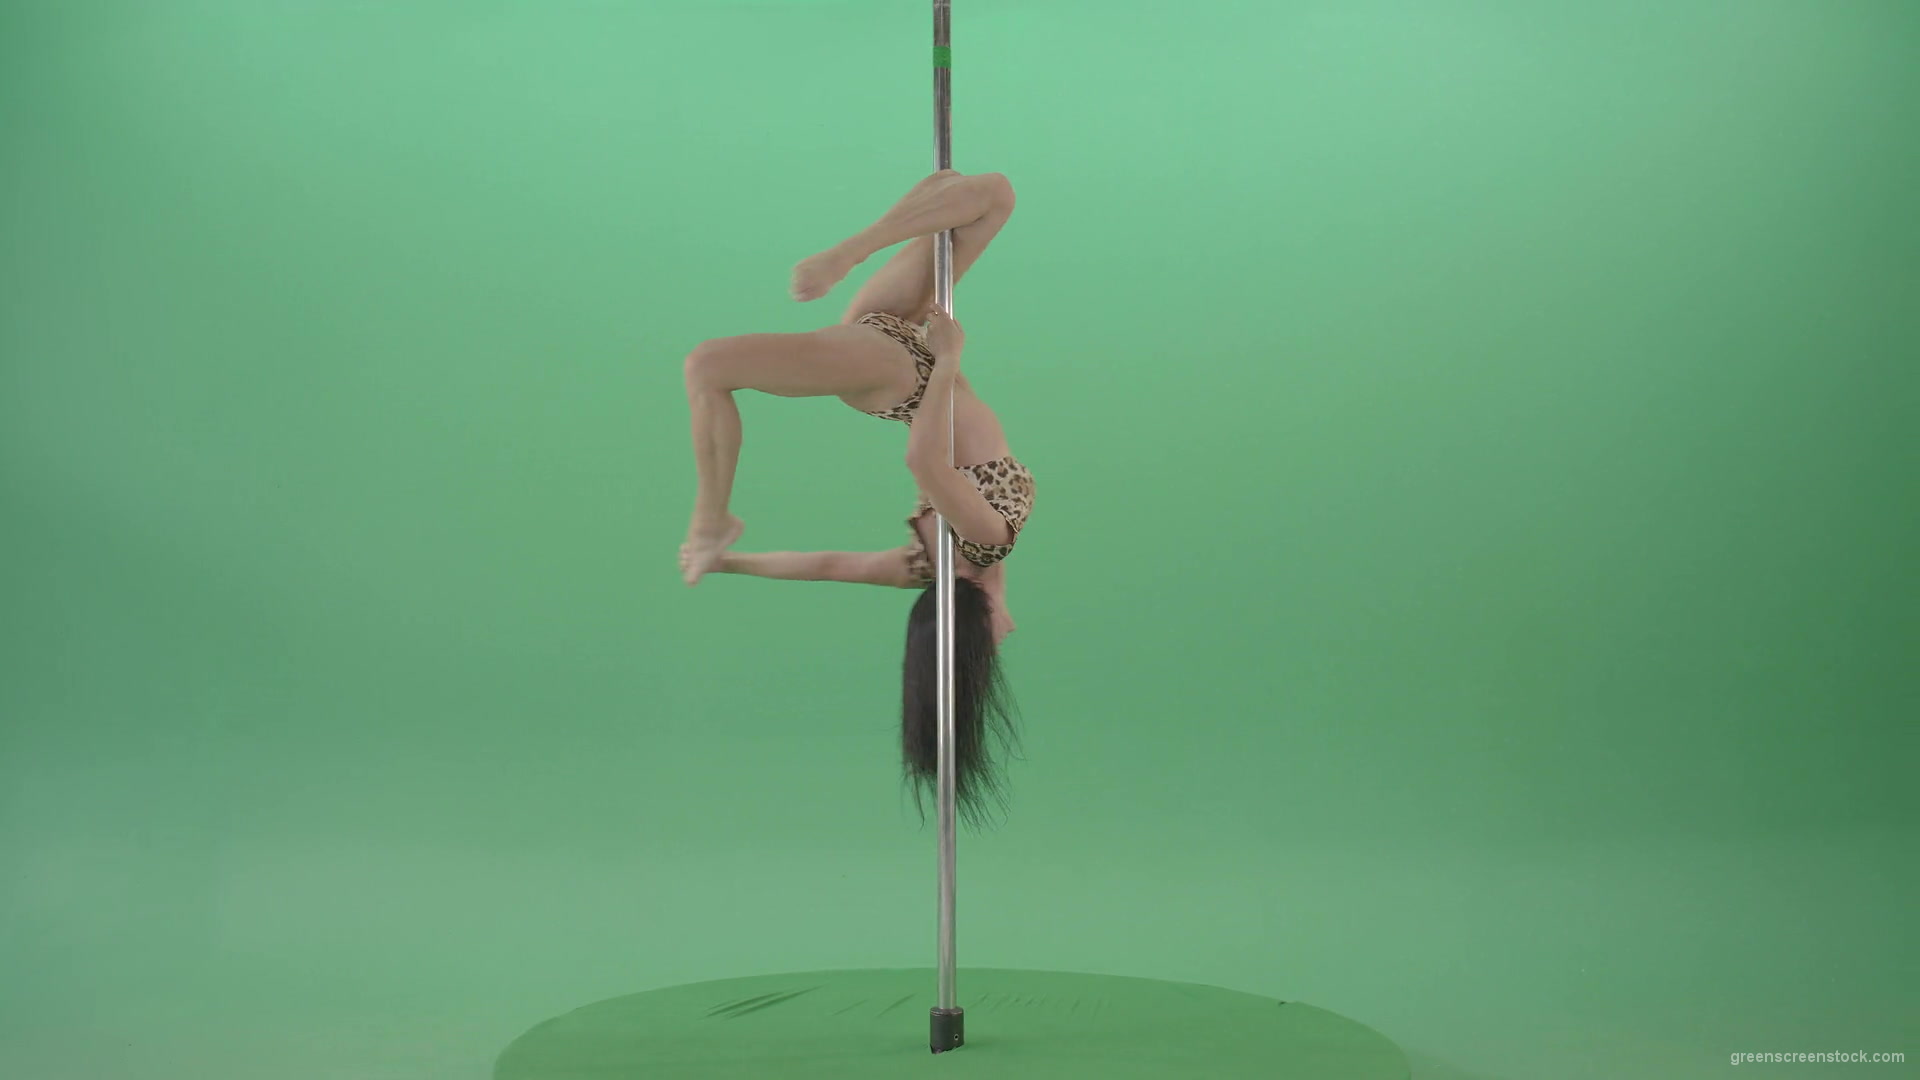 Athletic-sexy-female-model-spinning-on-pilon-in-jaguar-skin-underwear-dancing-pole-dance-on-Green-Screen-4K-Video-Footage-1920_007 Green Screen Stock